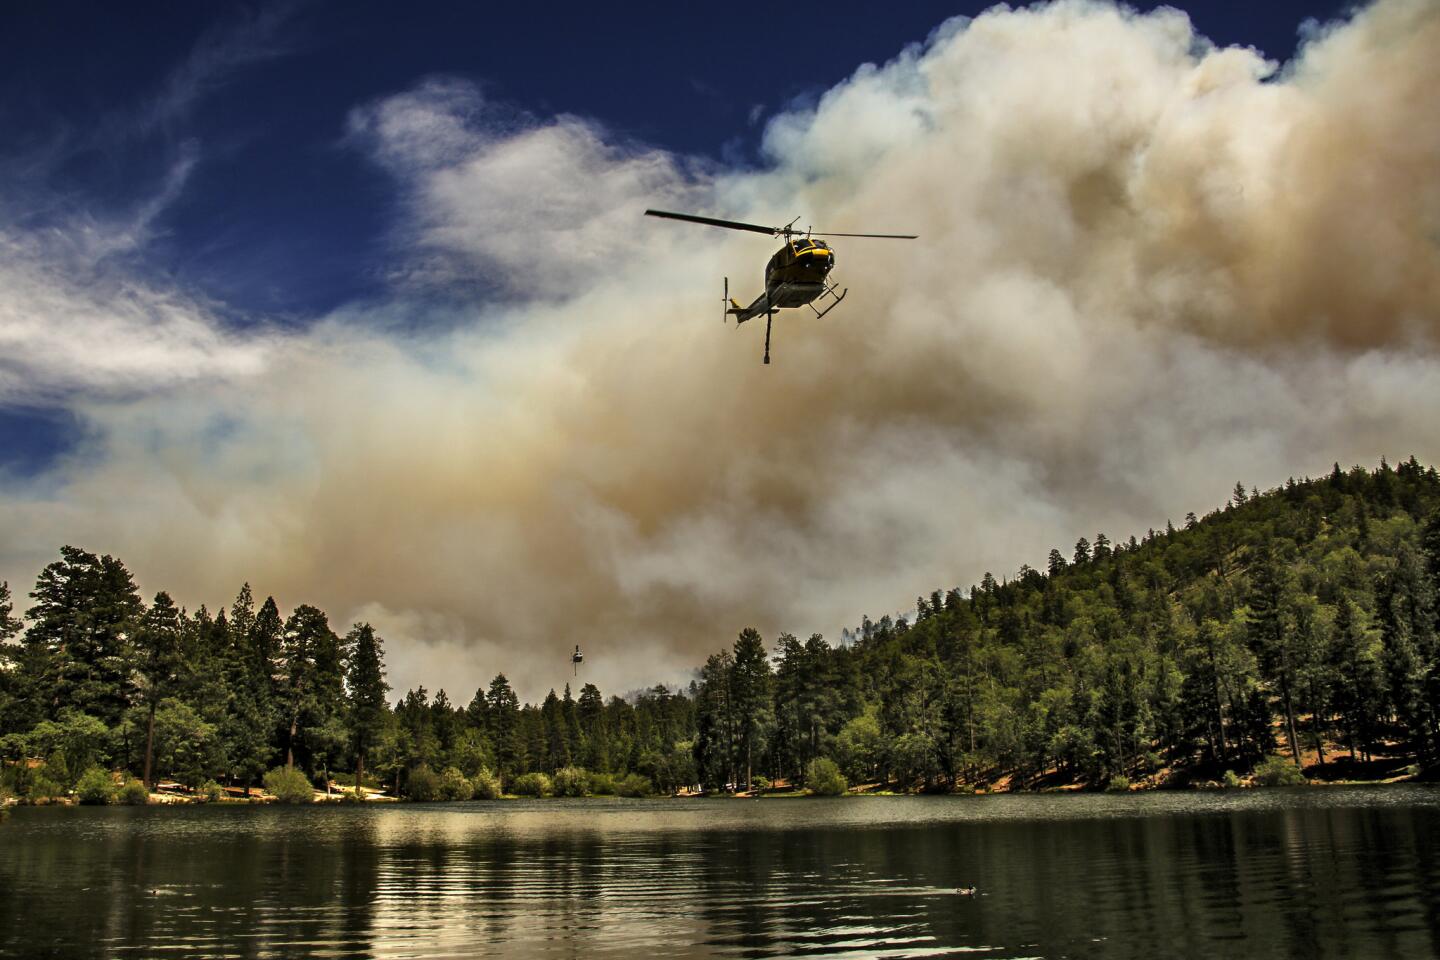 Lake fire in the San Bernardino National Forest